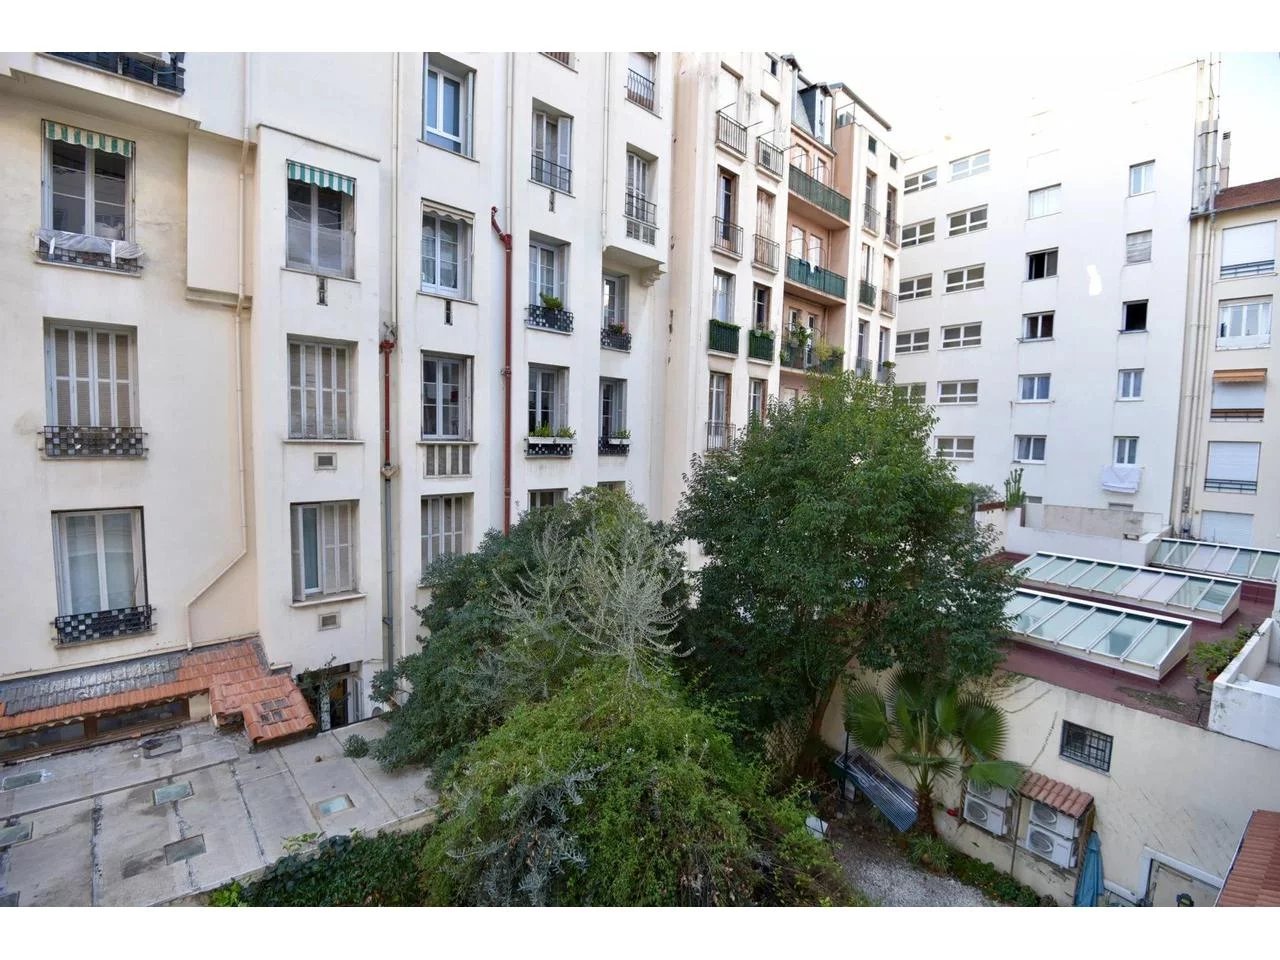 Appartement  2 Locali 54.35m2  In vendita   294 000 €